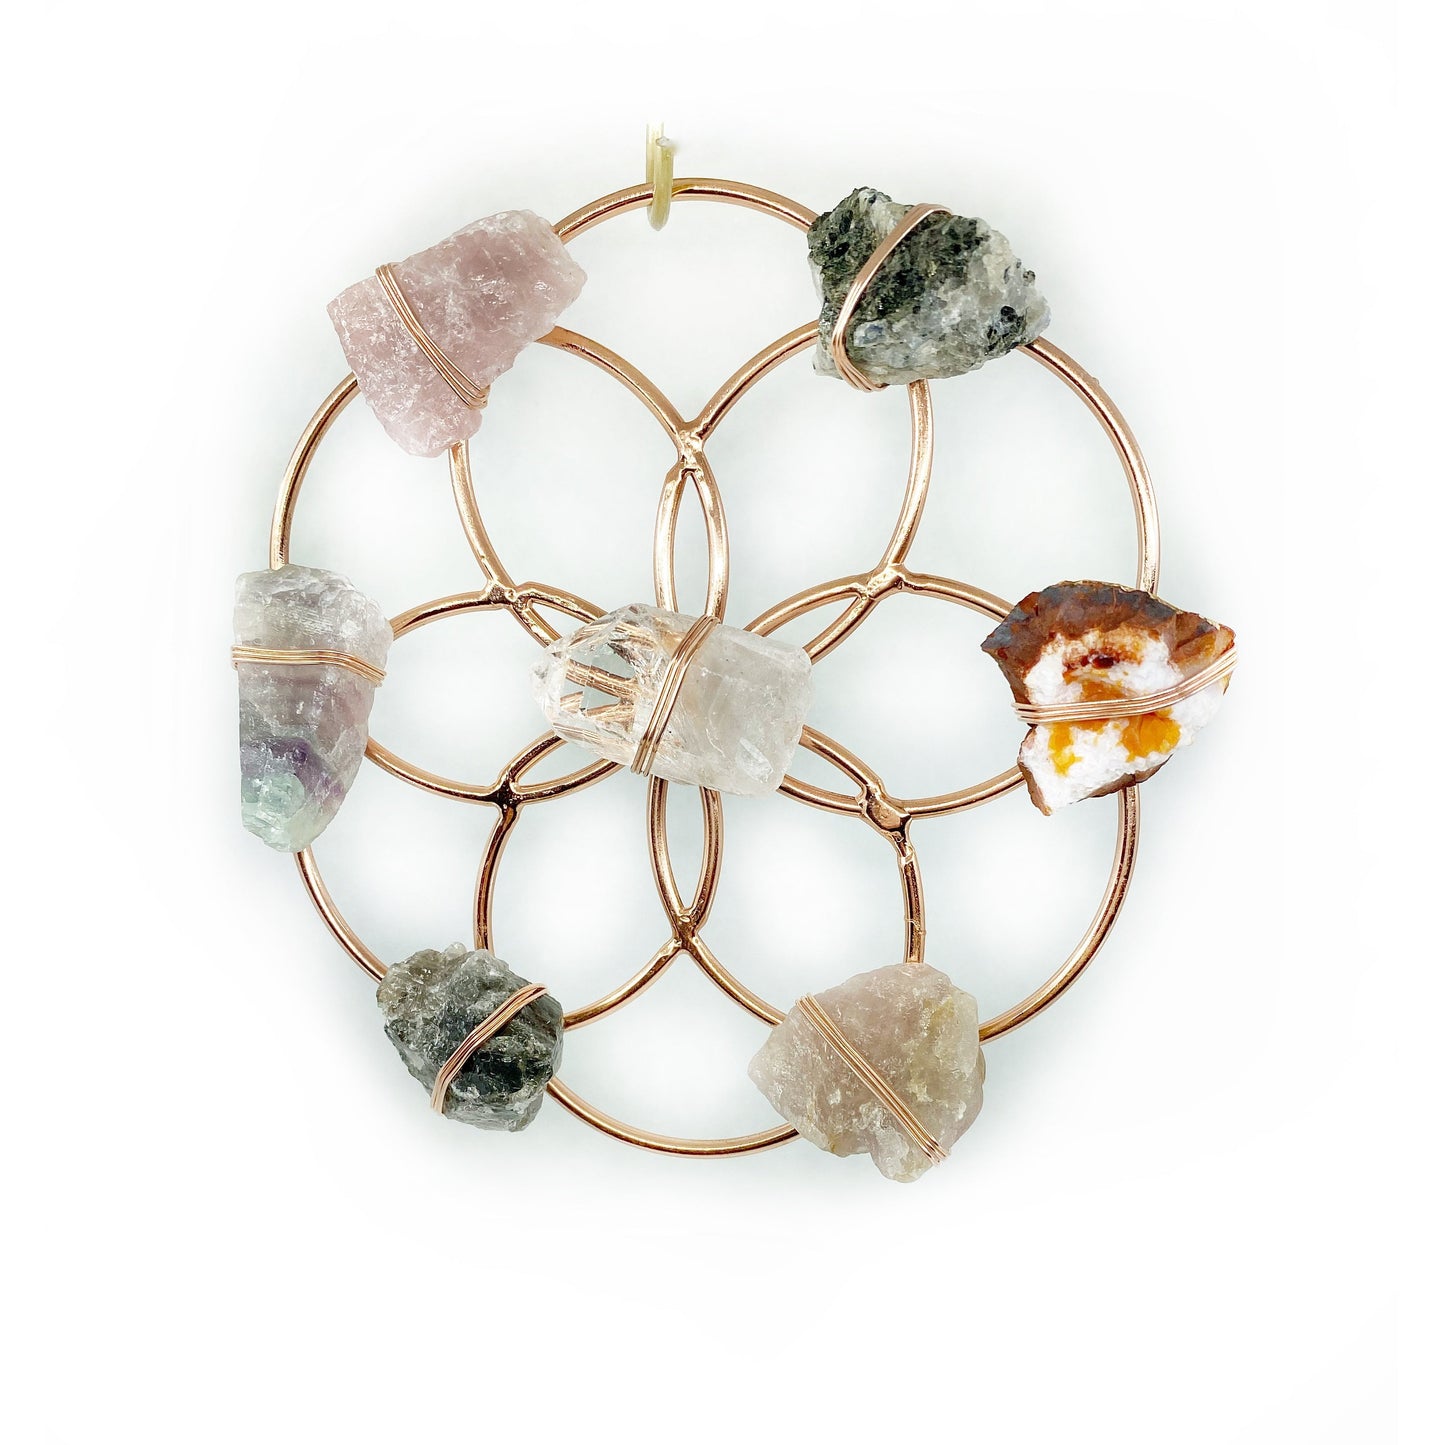 Divine Feminine Goddess Flower of Life Healing Crystal Grid by Ariana Ost